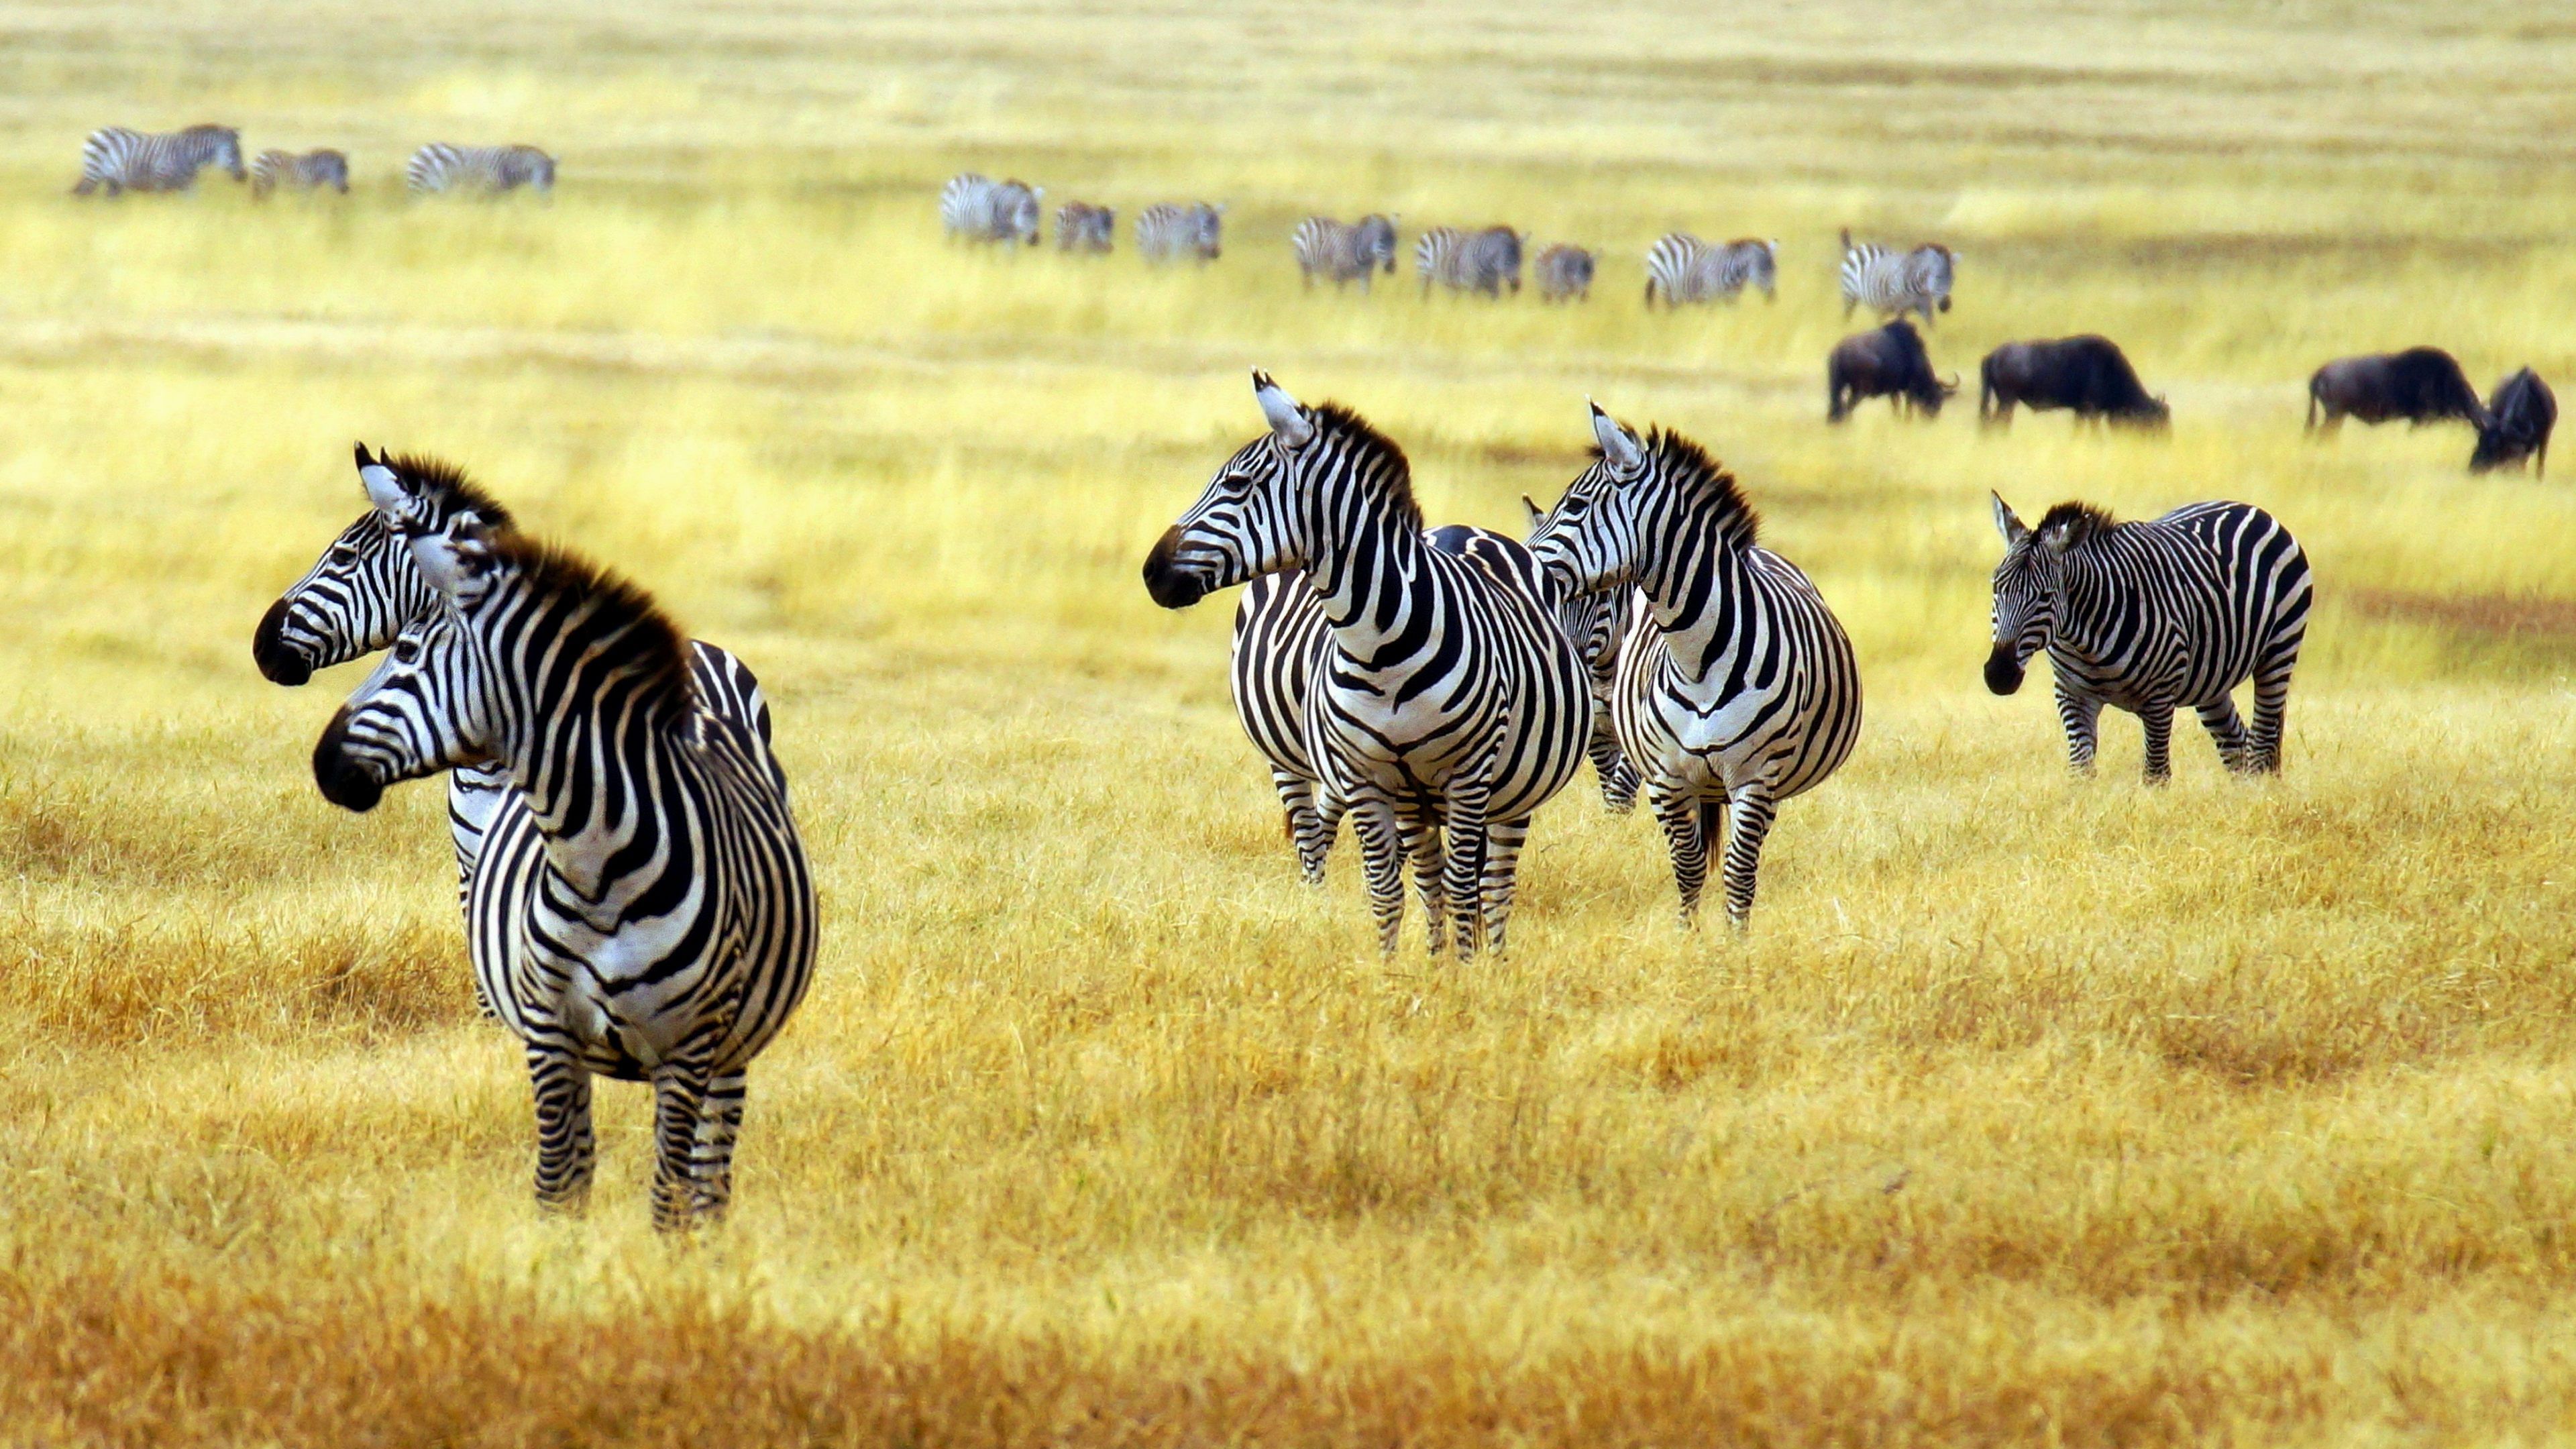 Zebras in African Savanna Forest wallpapers